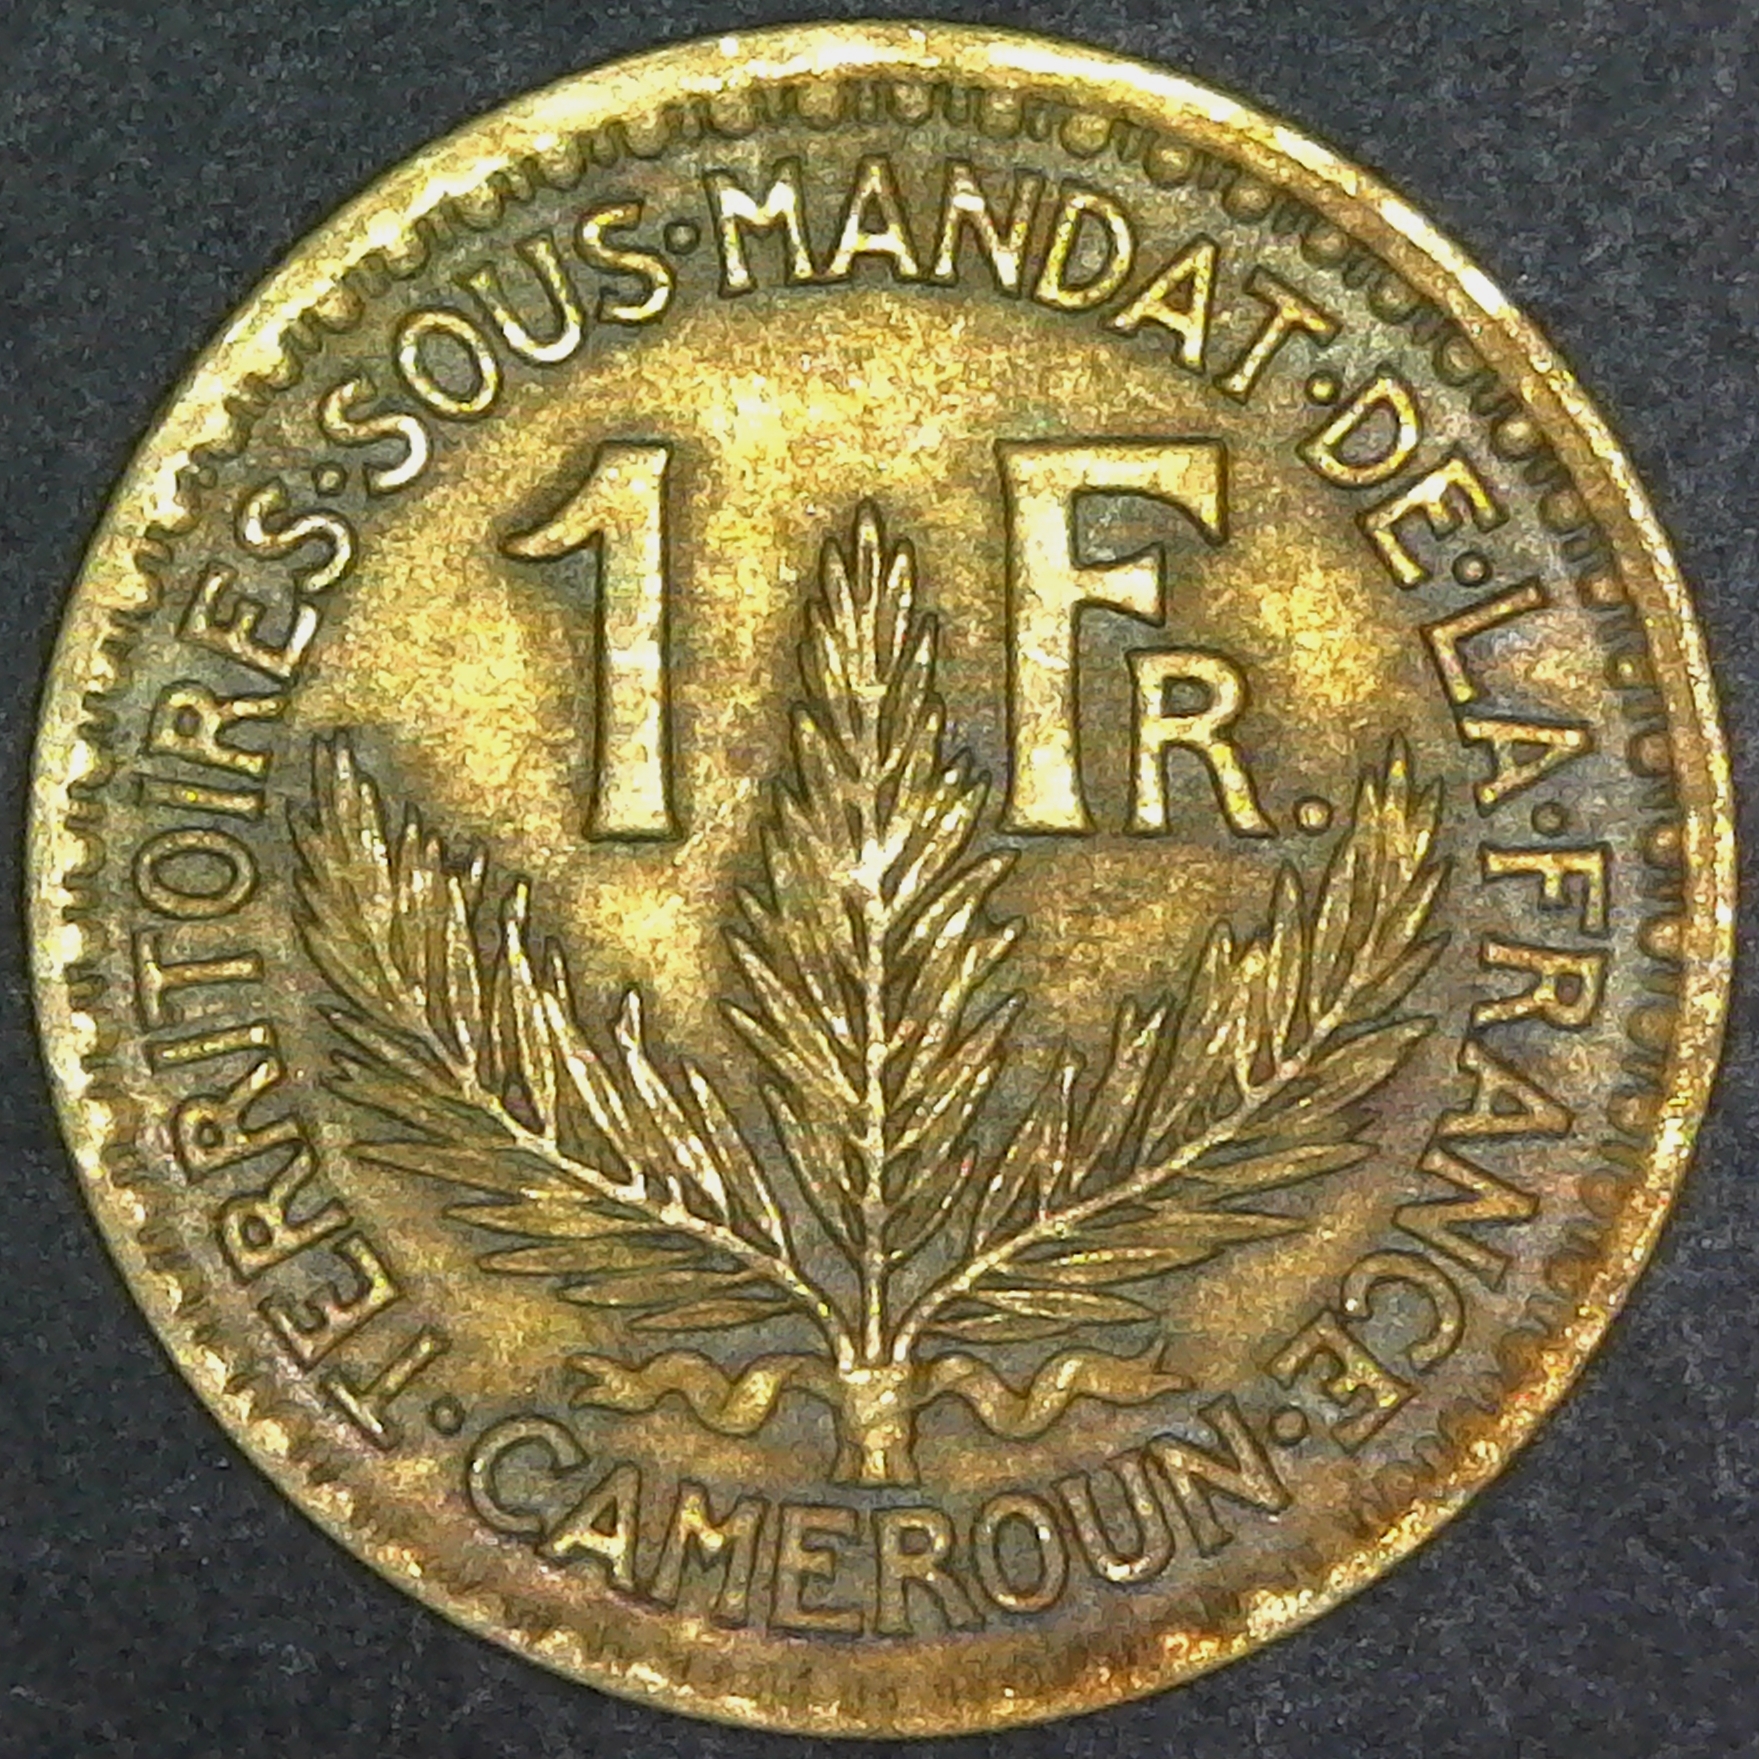 Cameroon 1 Franc 1925 obverse.jpg